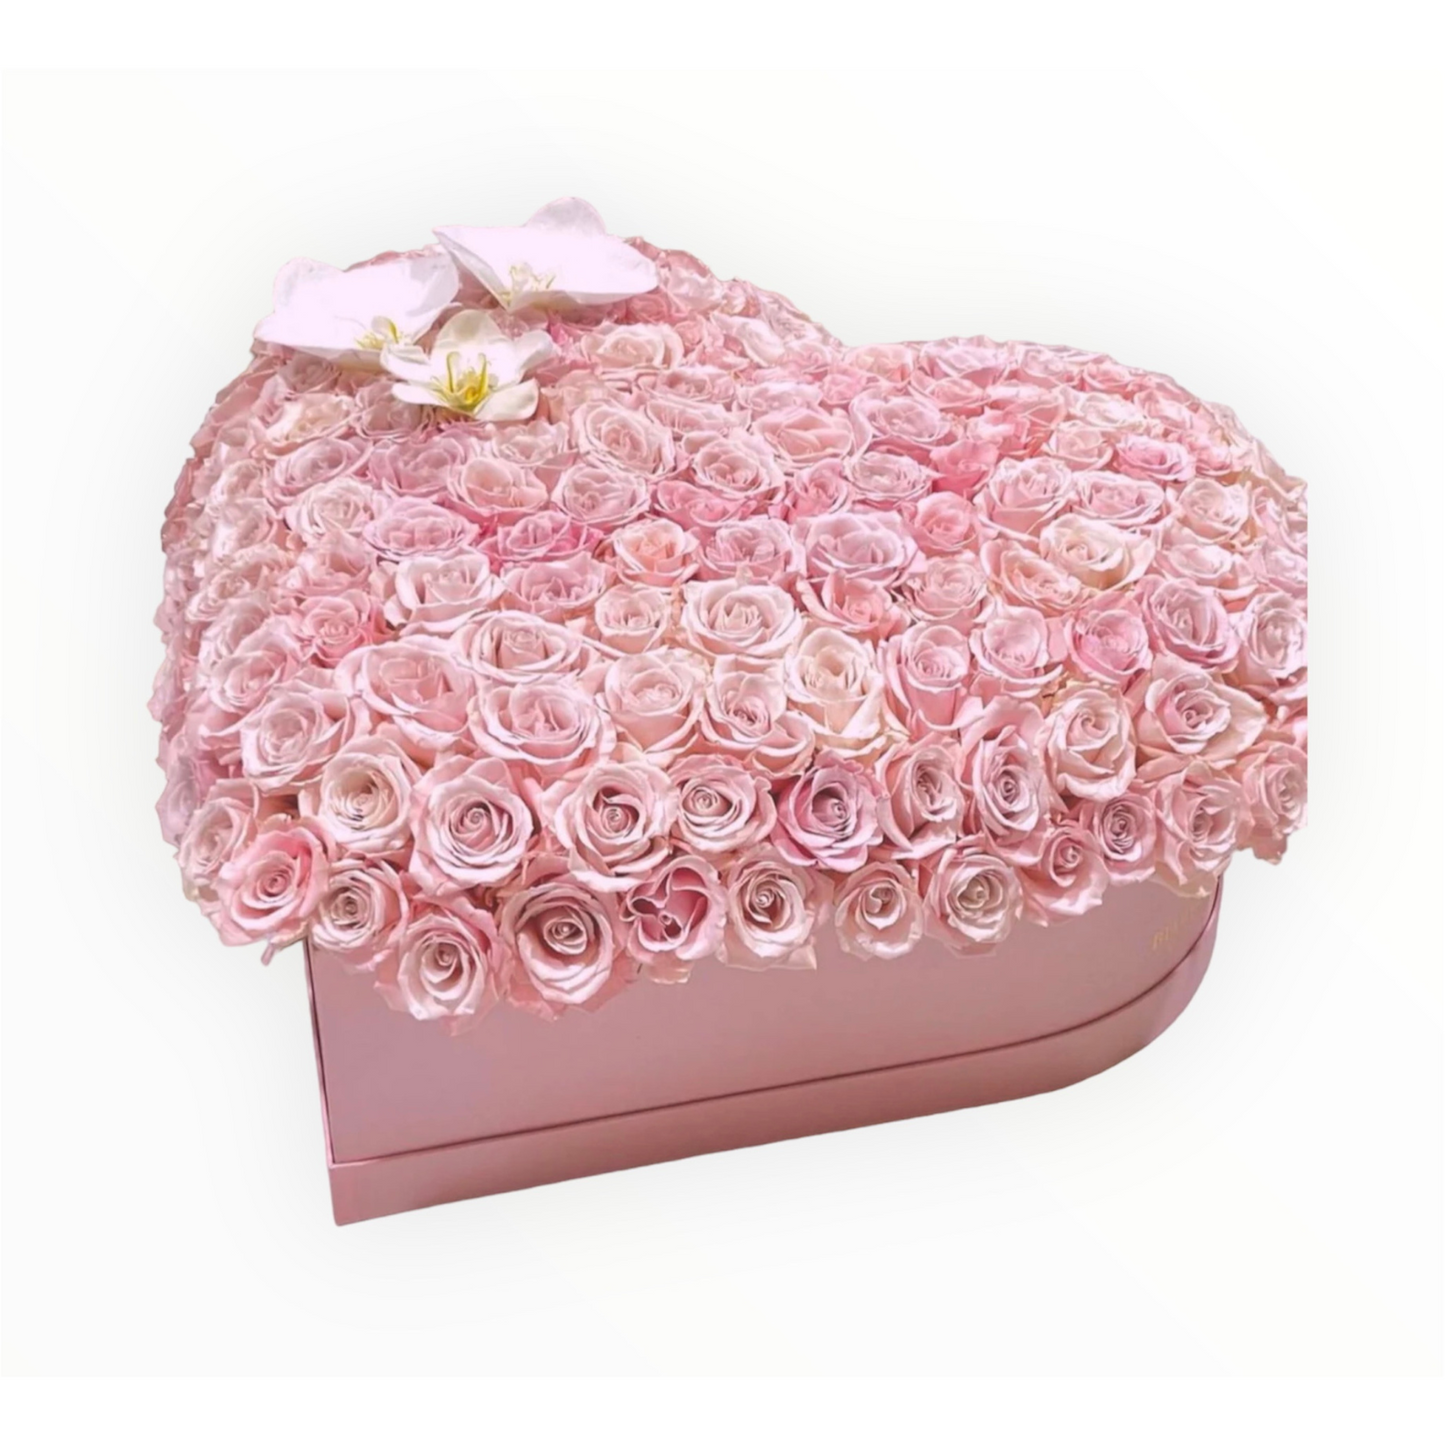 The Heart rose box 3D